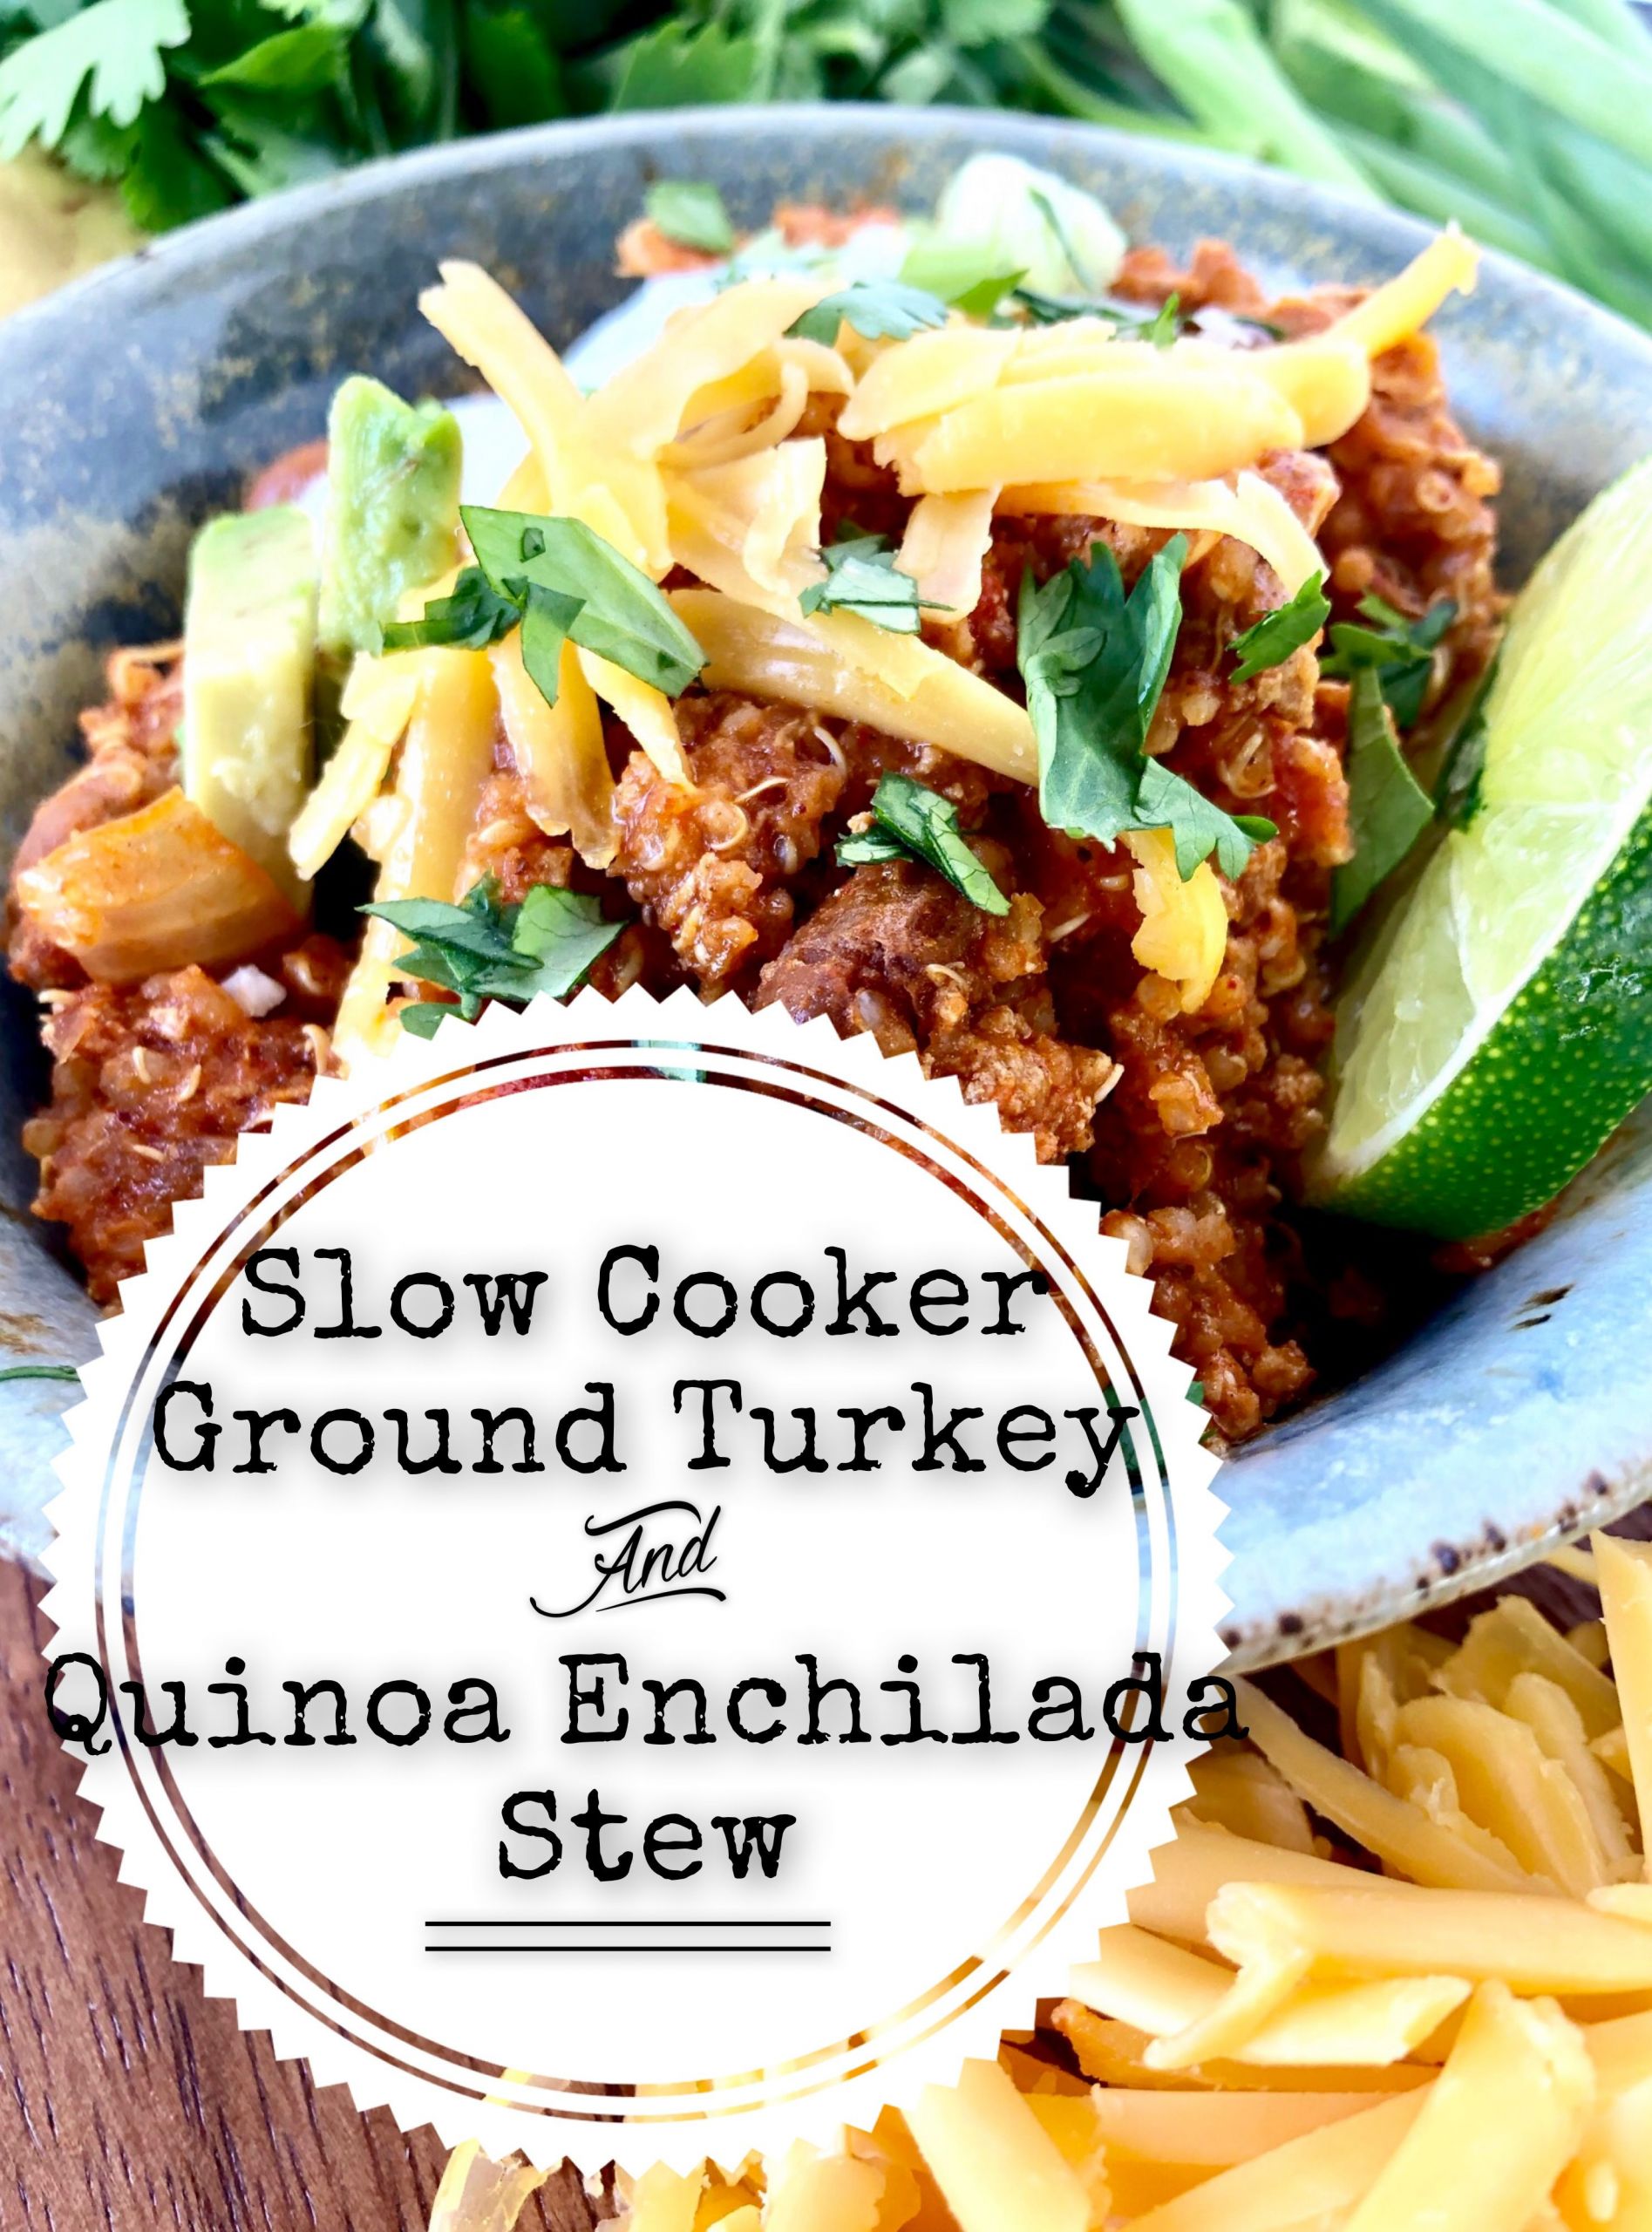 Slow Cooker Ground Turkey Recipes
 Slow Cooker Ground Turkey and Quinoa Enchilada Stew